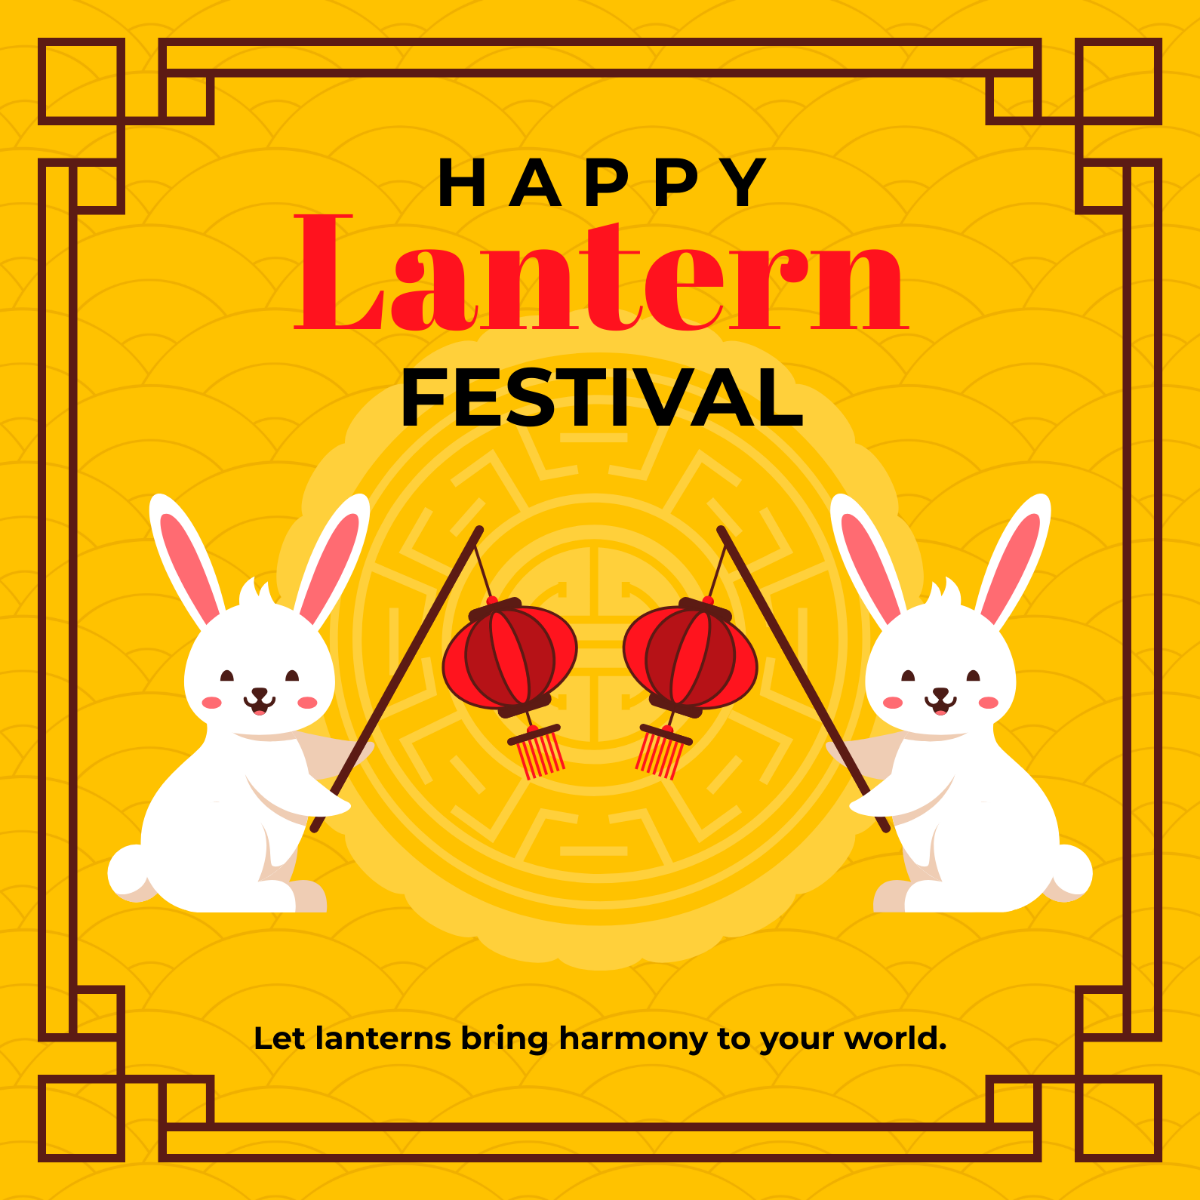  Chinese Lantern Festival LinkedIn Post Template